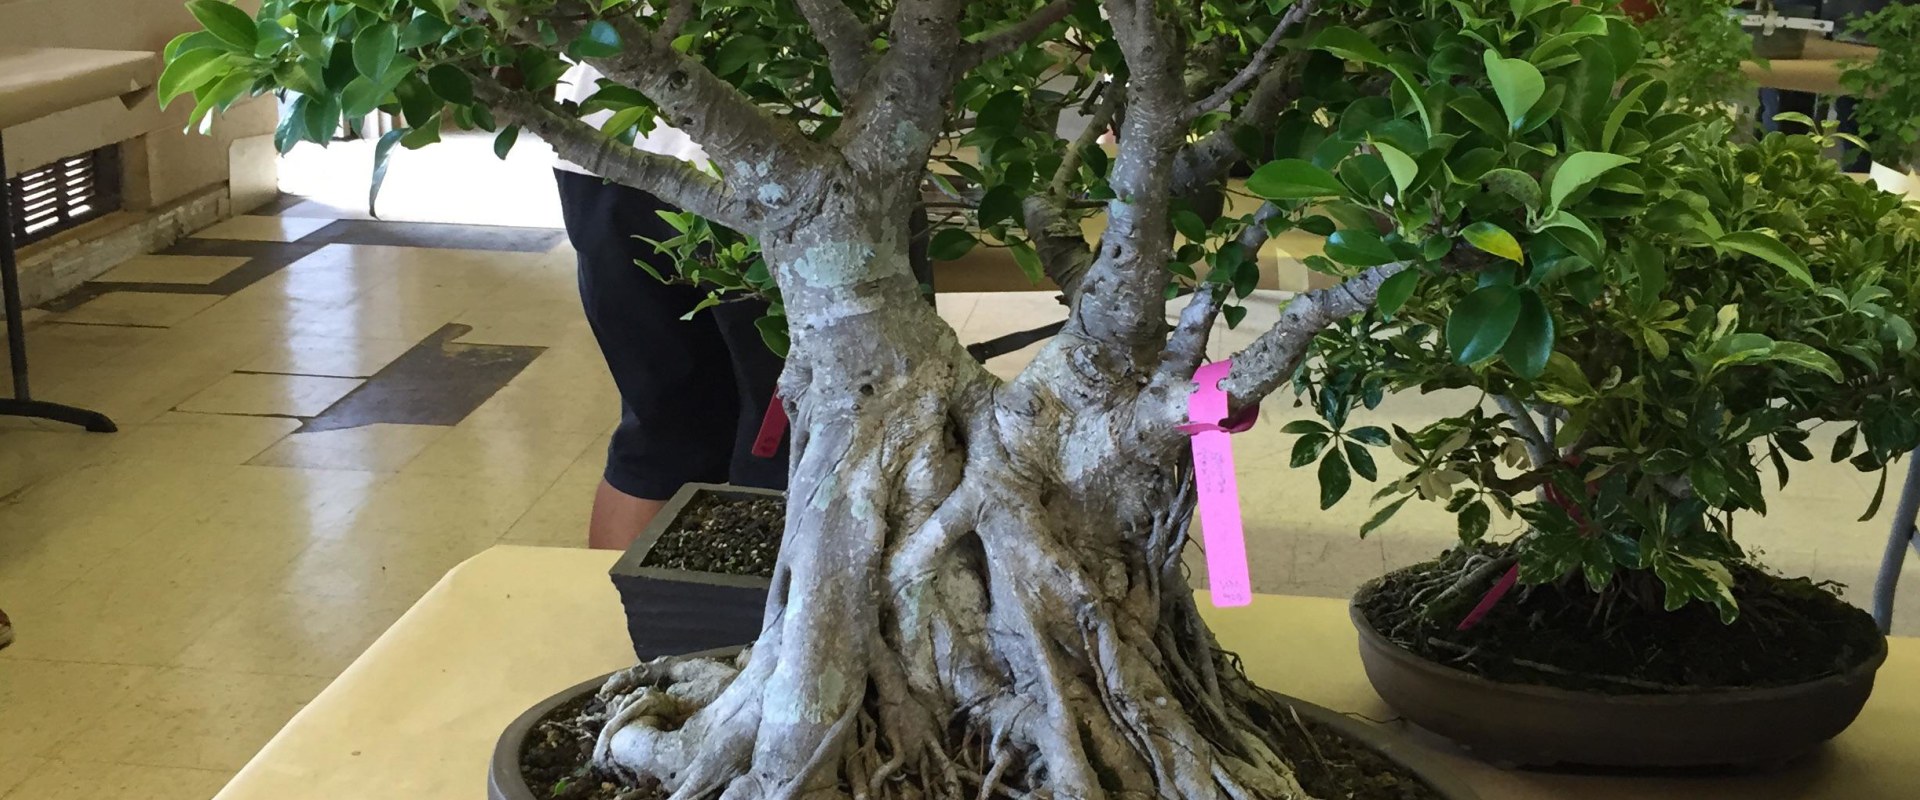 Bonsai Honolulu: Tips for Beginners to Start Growing Bonsai Trees in Honolulu